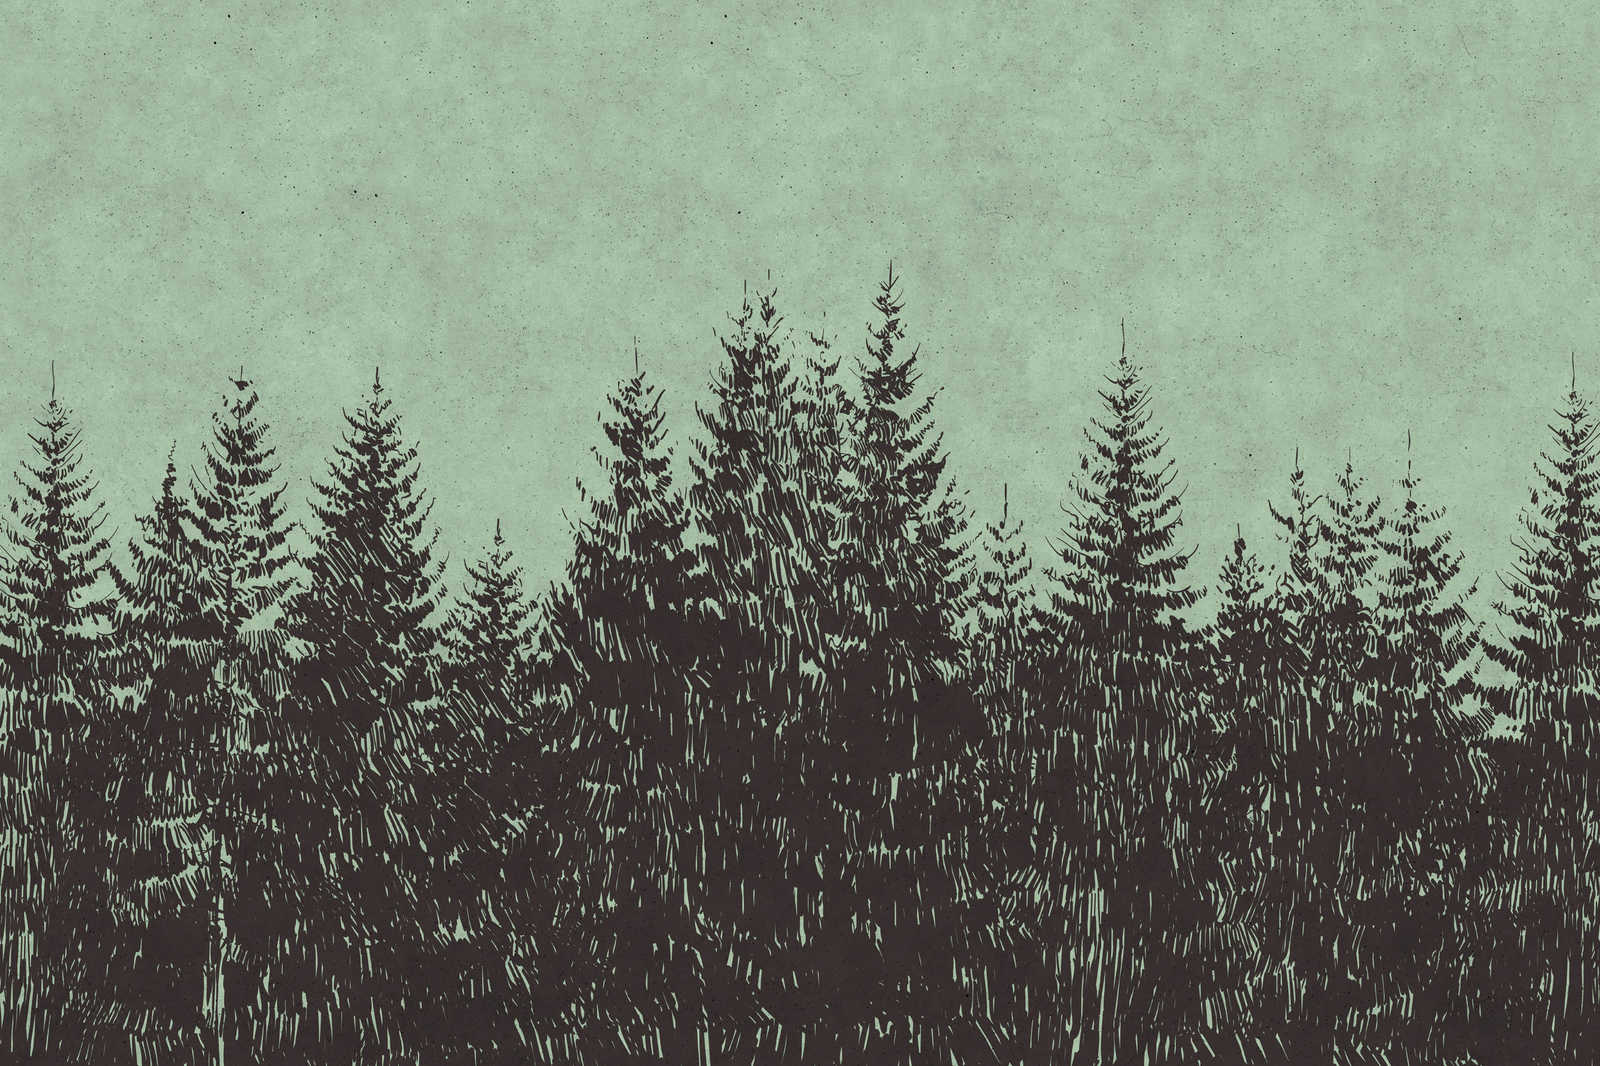             Forêt toile style dessin Pointes de sapin - 0,90 m x 0,60 m
        